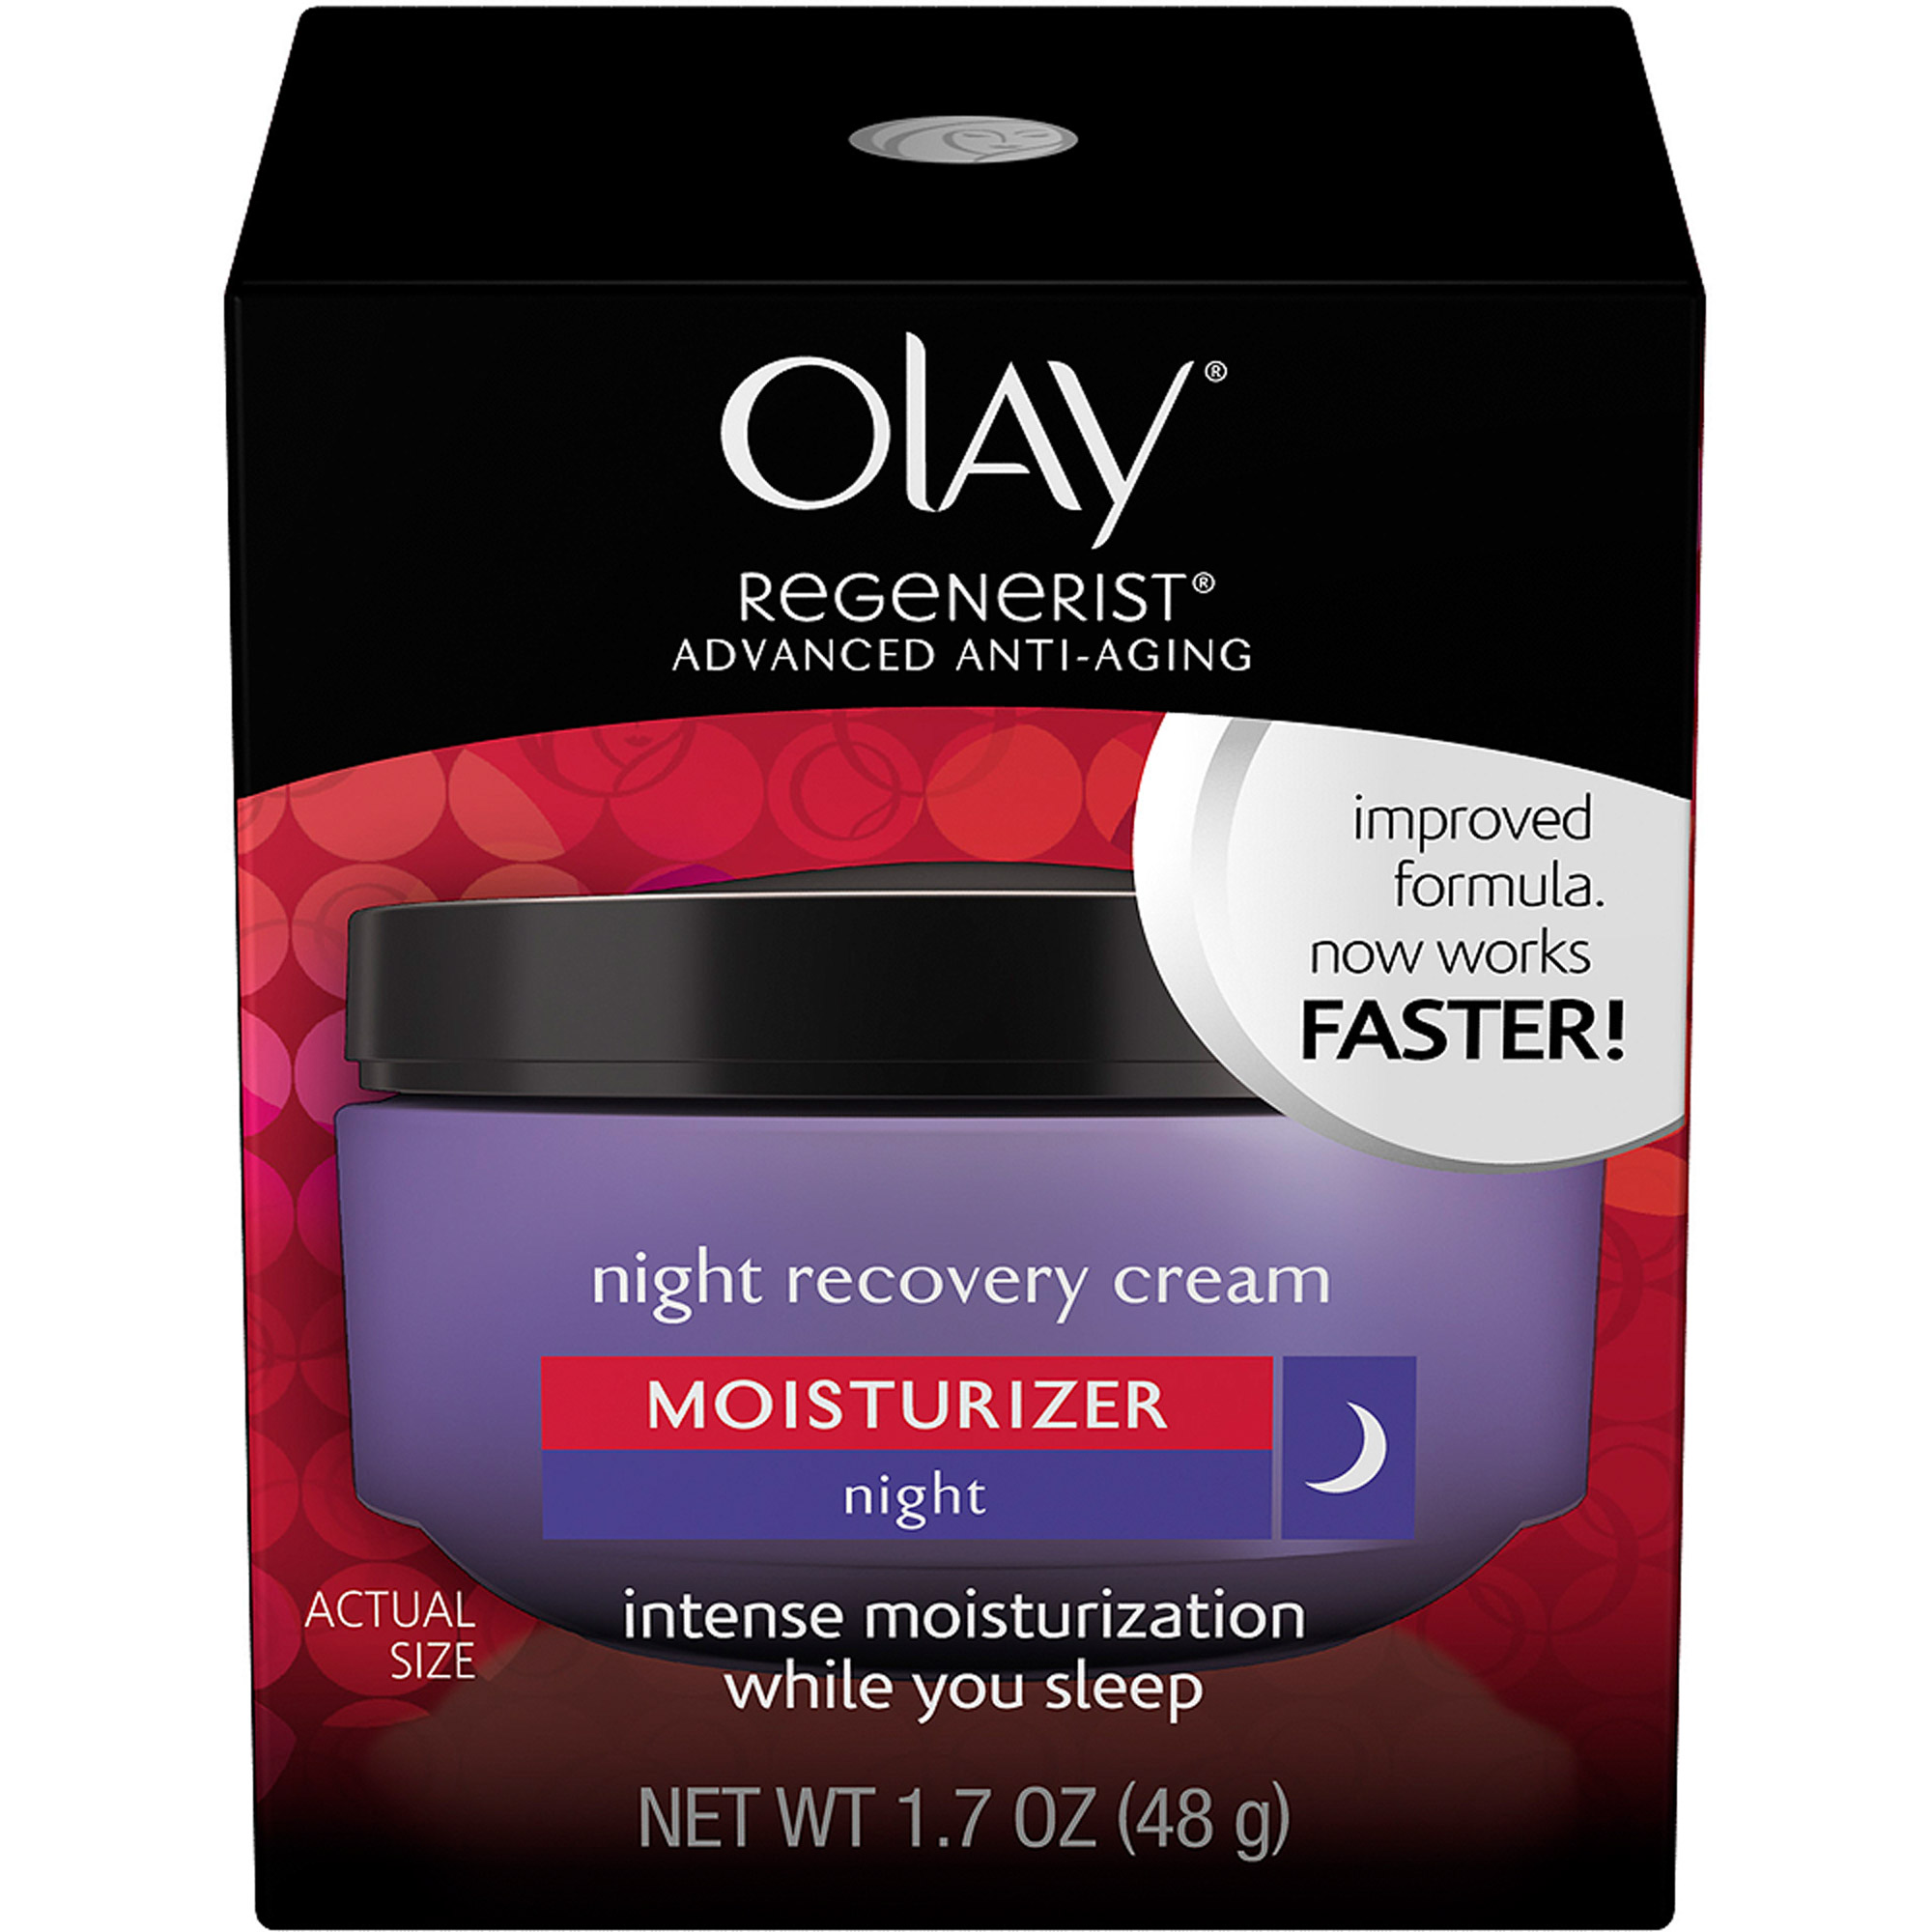 Olay Regenerist Night Recovery Cream Moisturizer, 1.7 oz - image 4 of 10